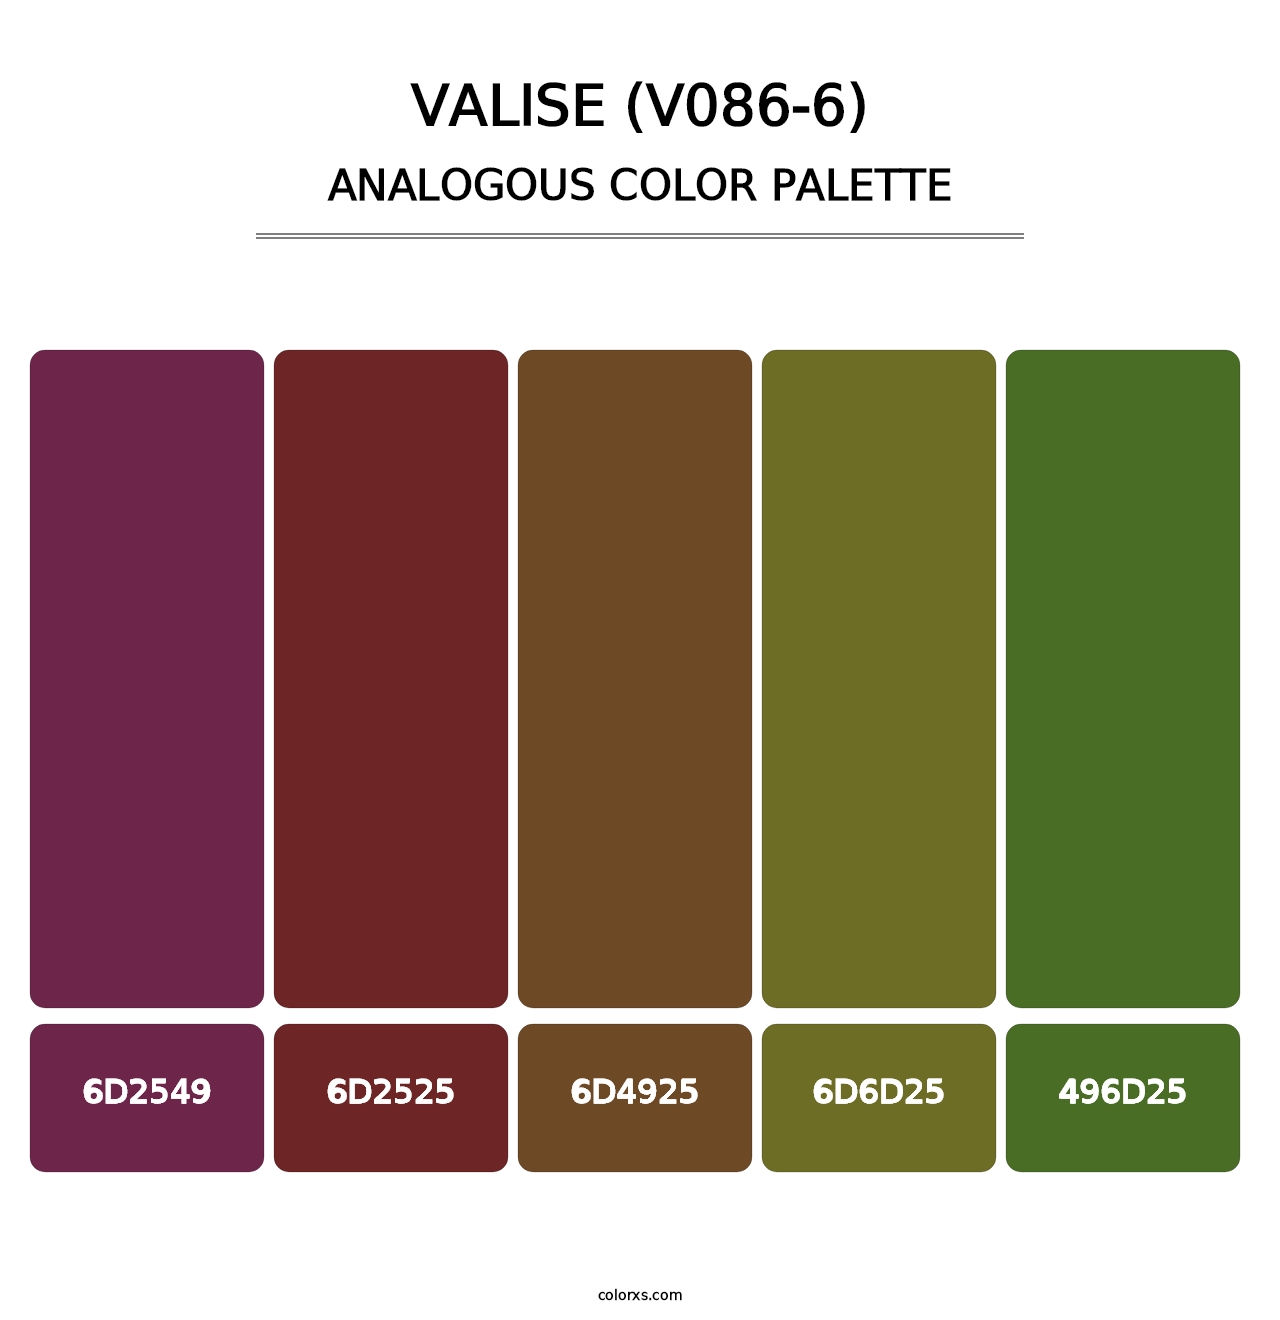 Valise (V086-6) - Analogous Color Palette